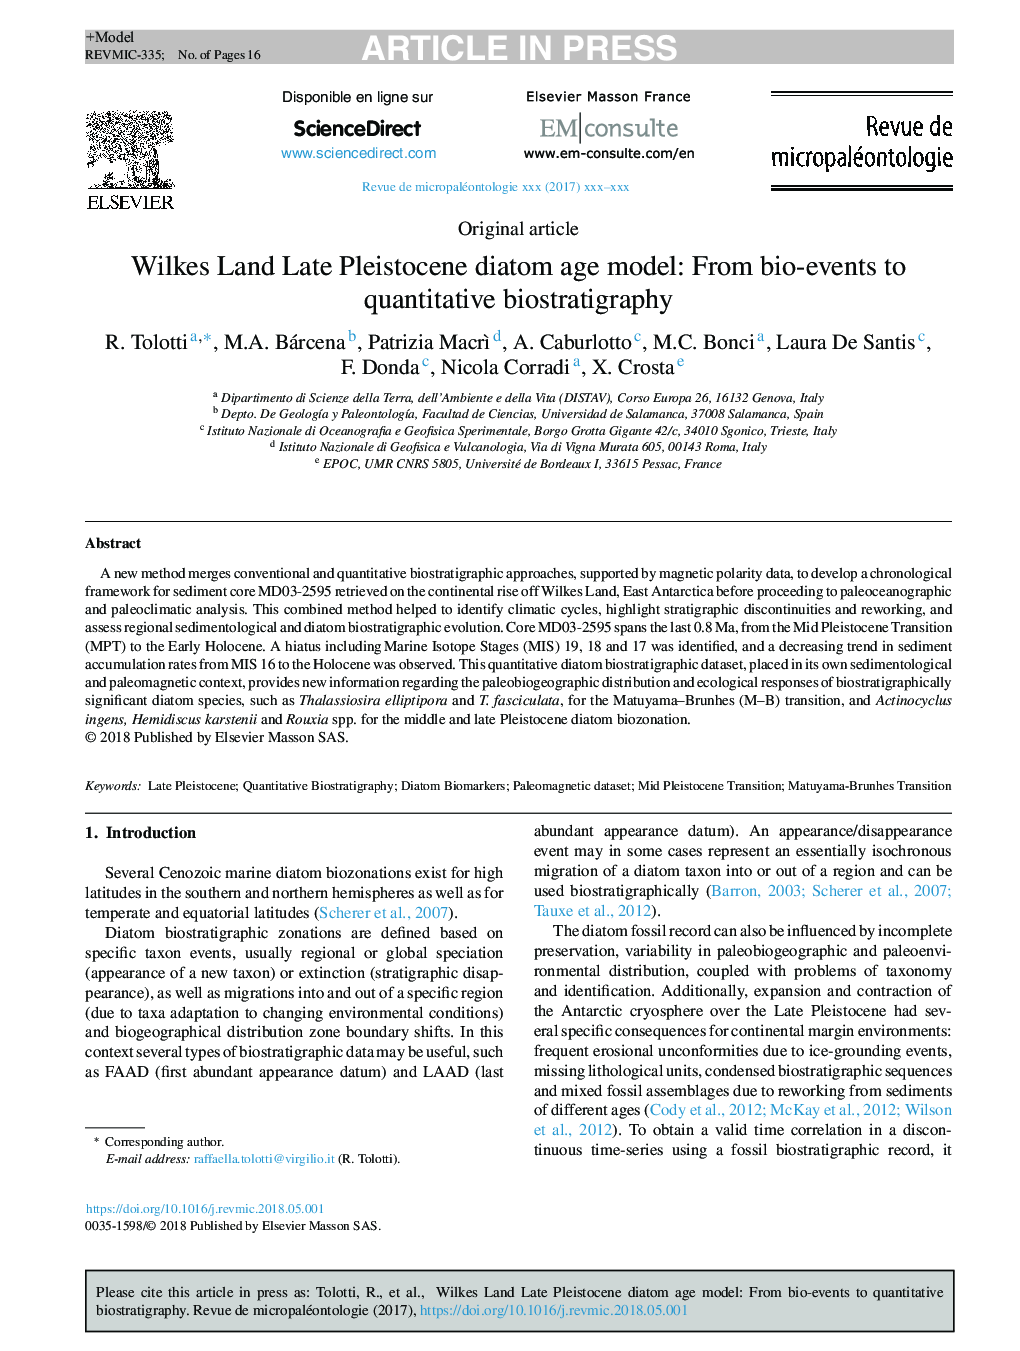 Wilkes Land Late Pleistocene diatom age model: From bio-events to quantitative biostratigraphy